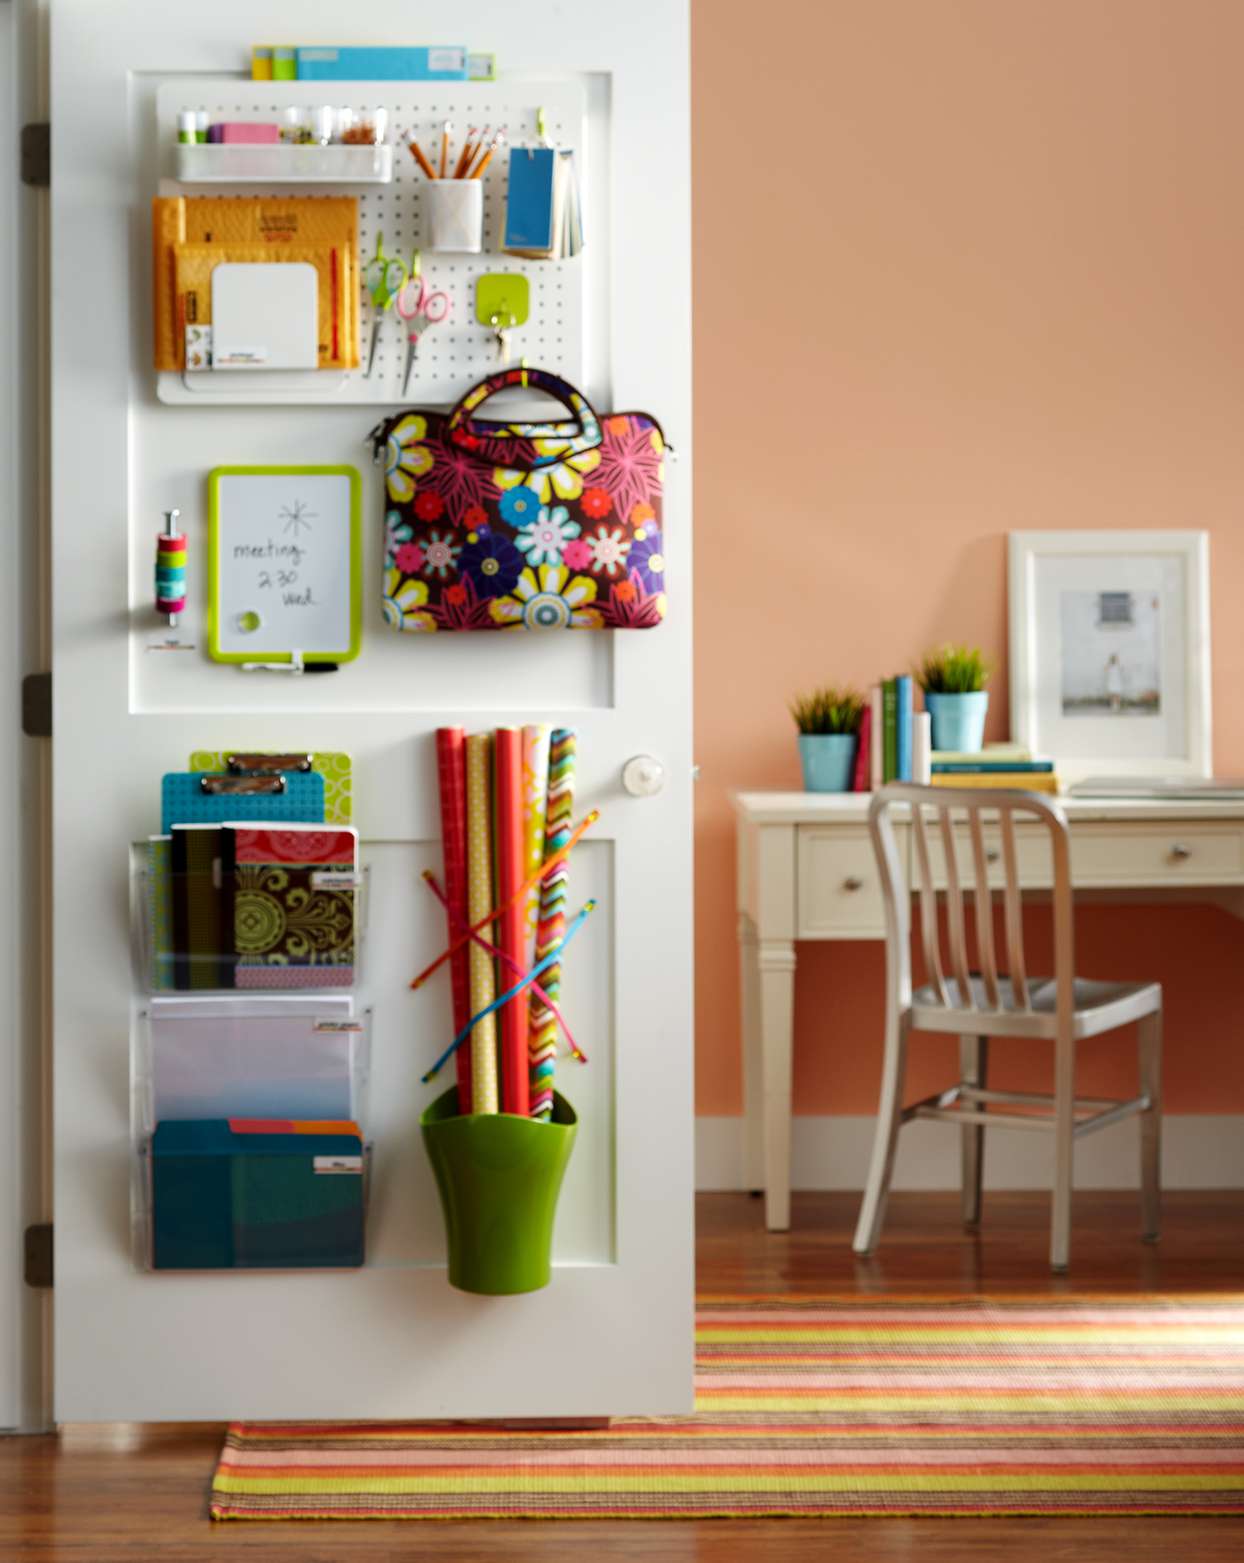 Items organize on closet door